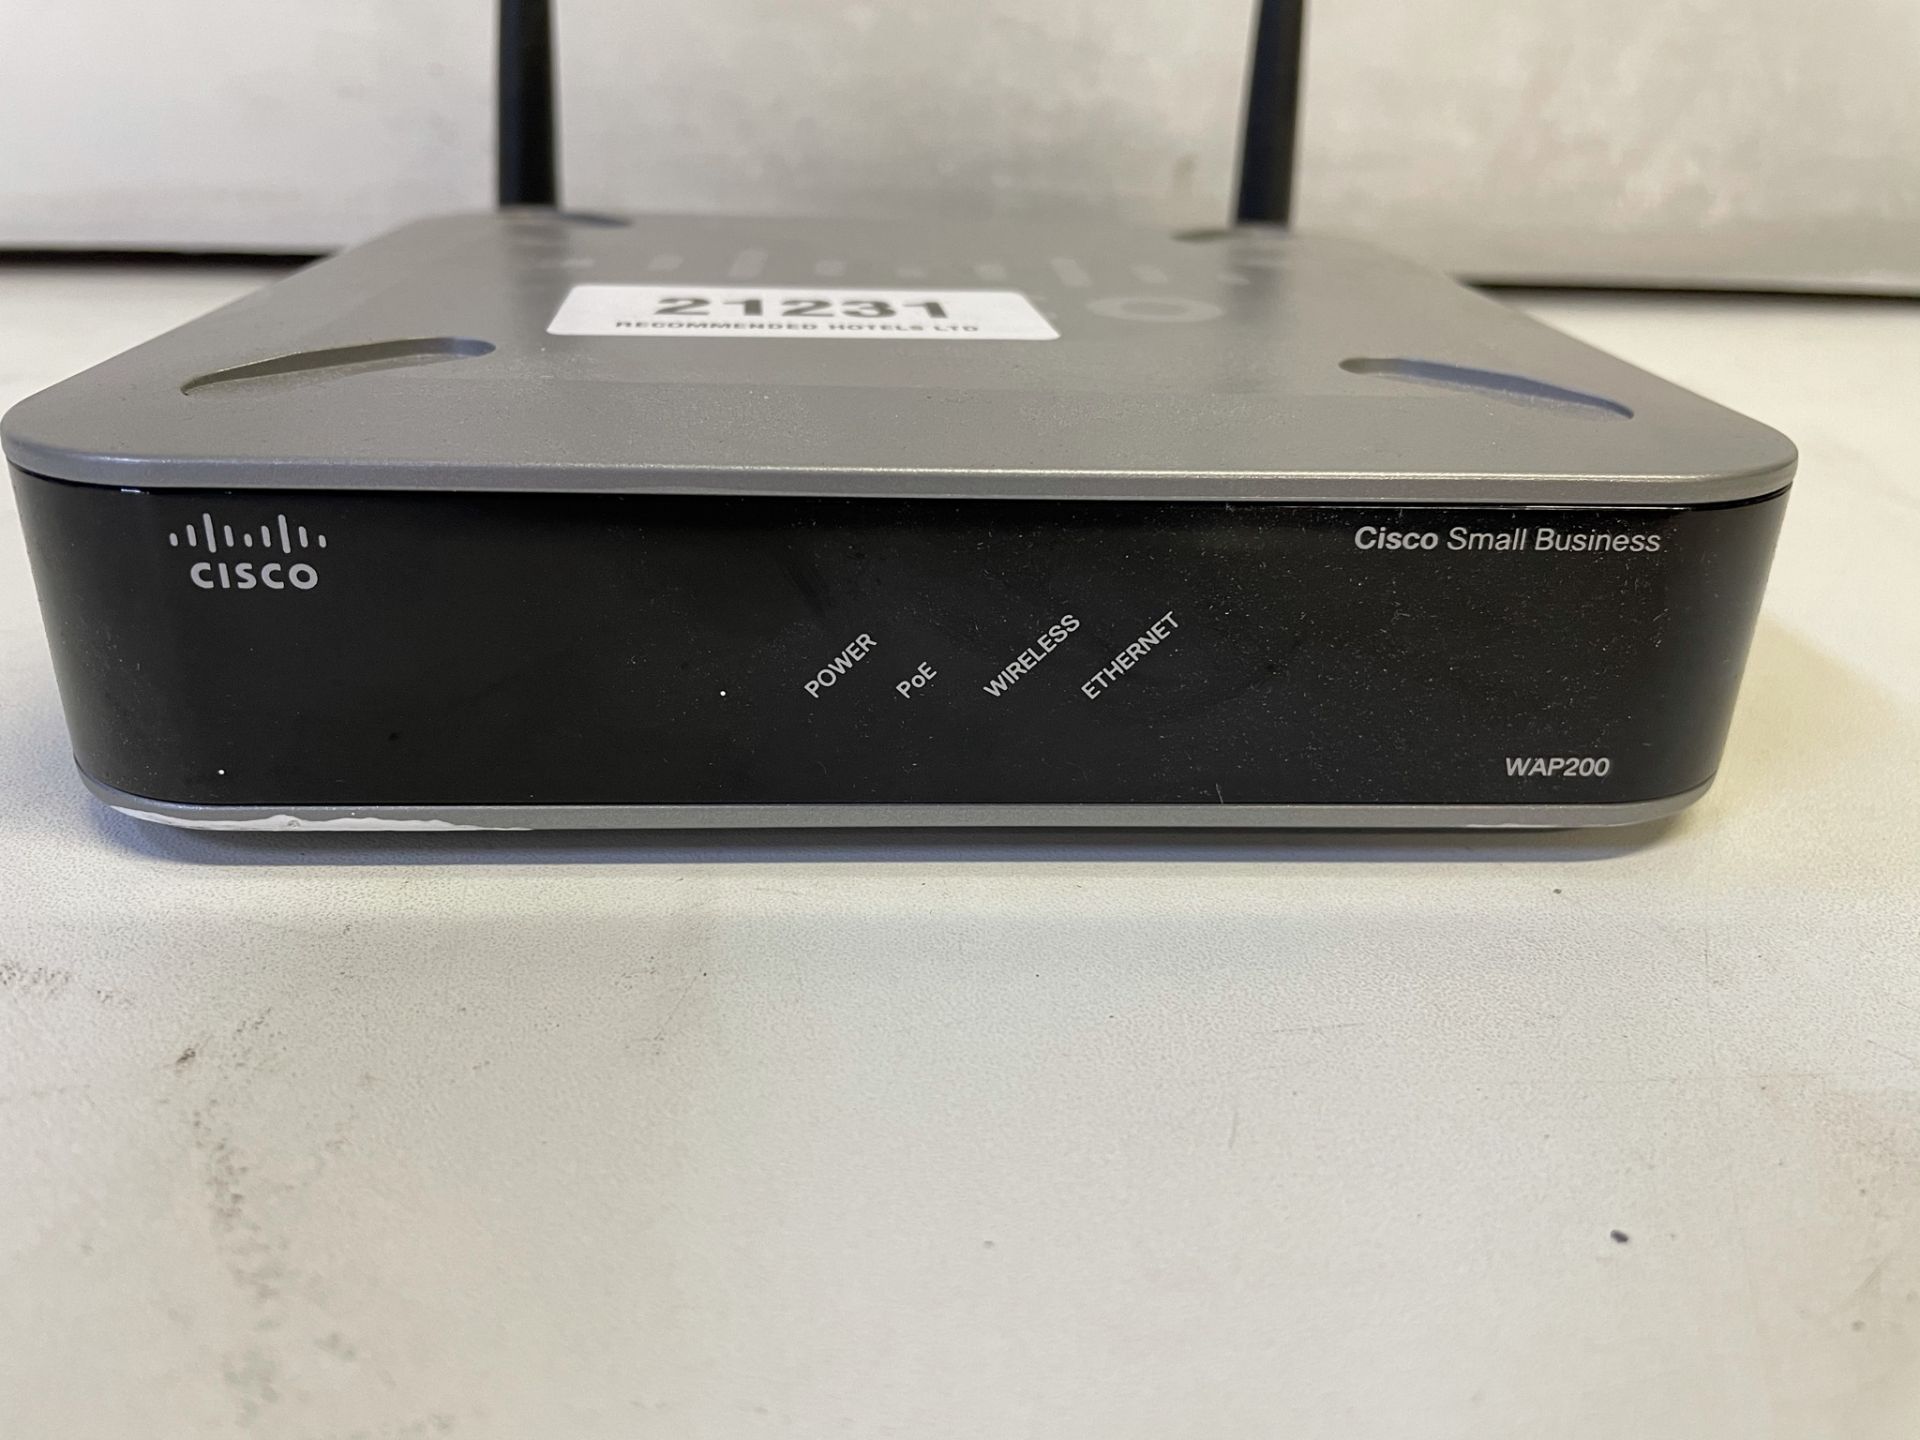 Cisco WAP200 Small Business Wireless Access Point/Rangebooster - Image 4 of 5